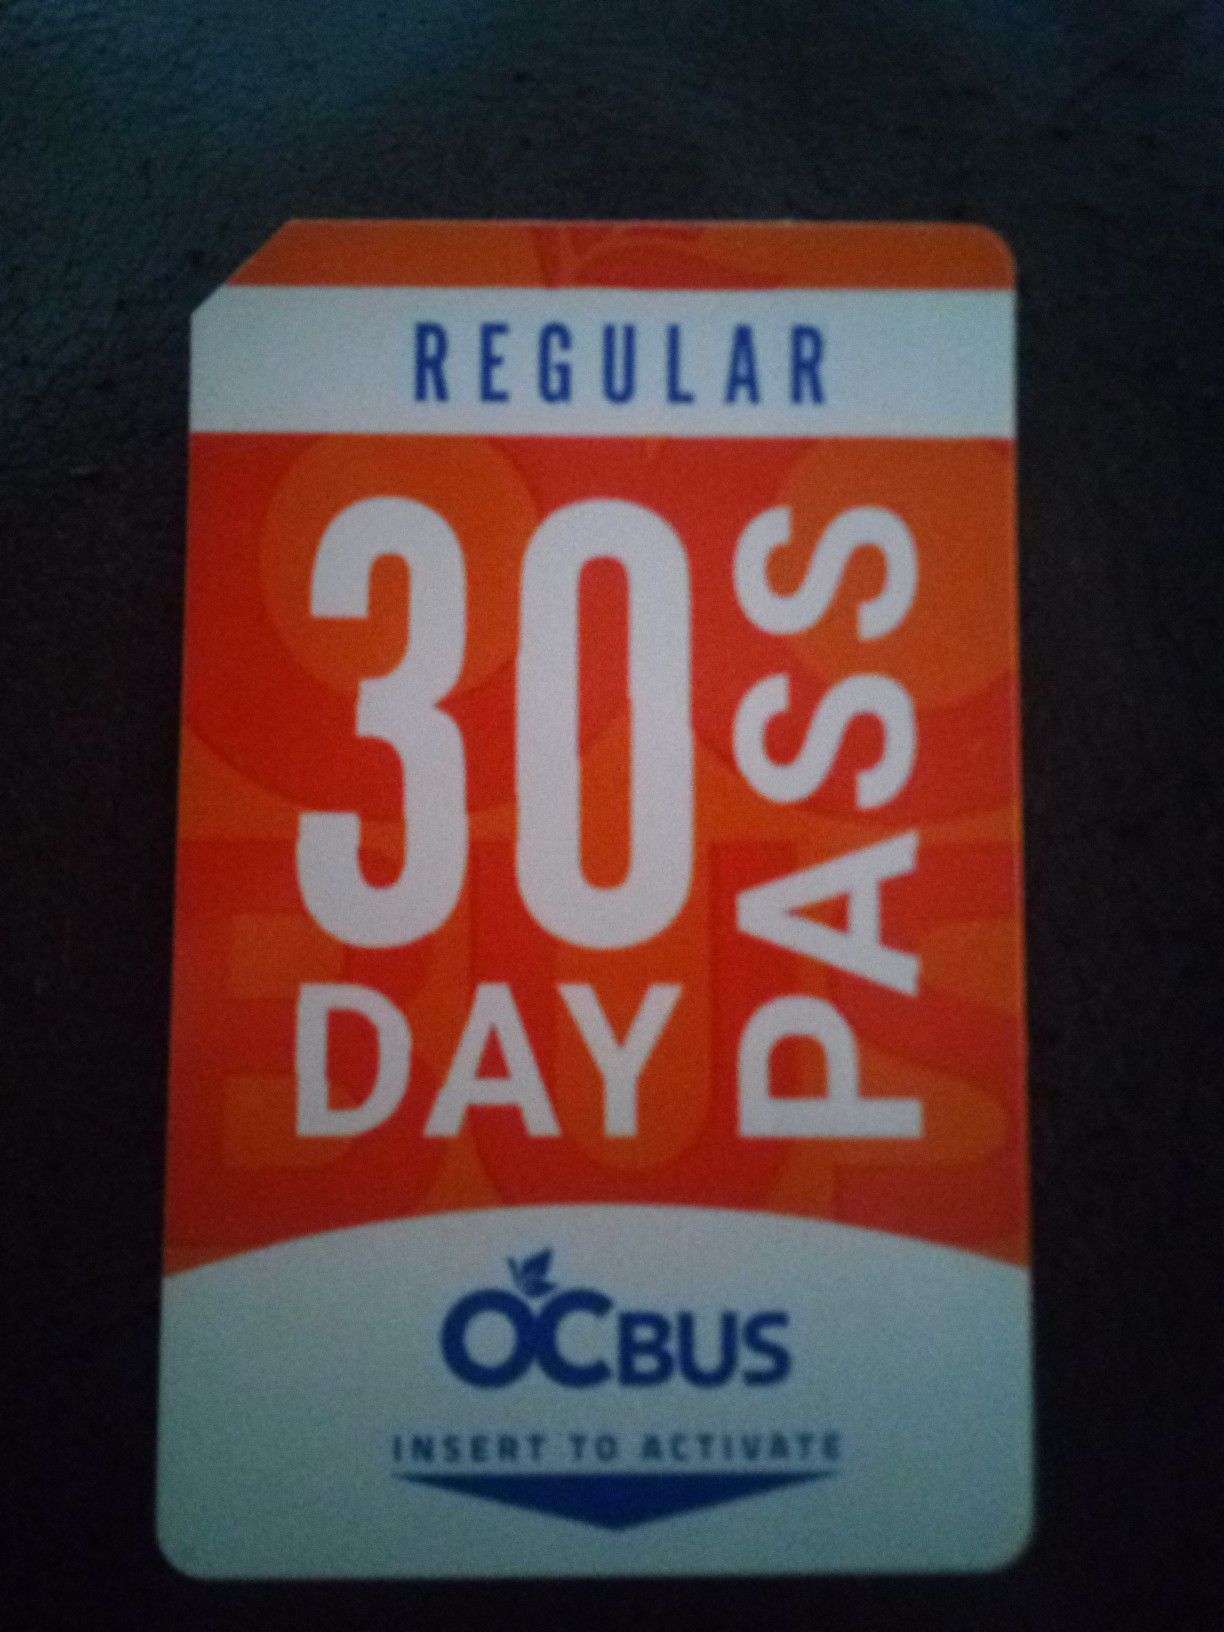 Regular 30 day Bus pass